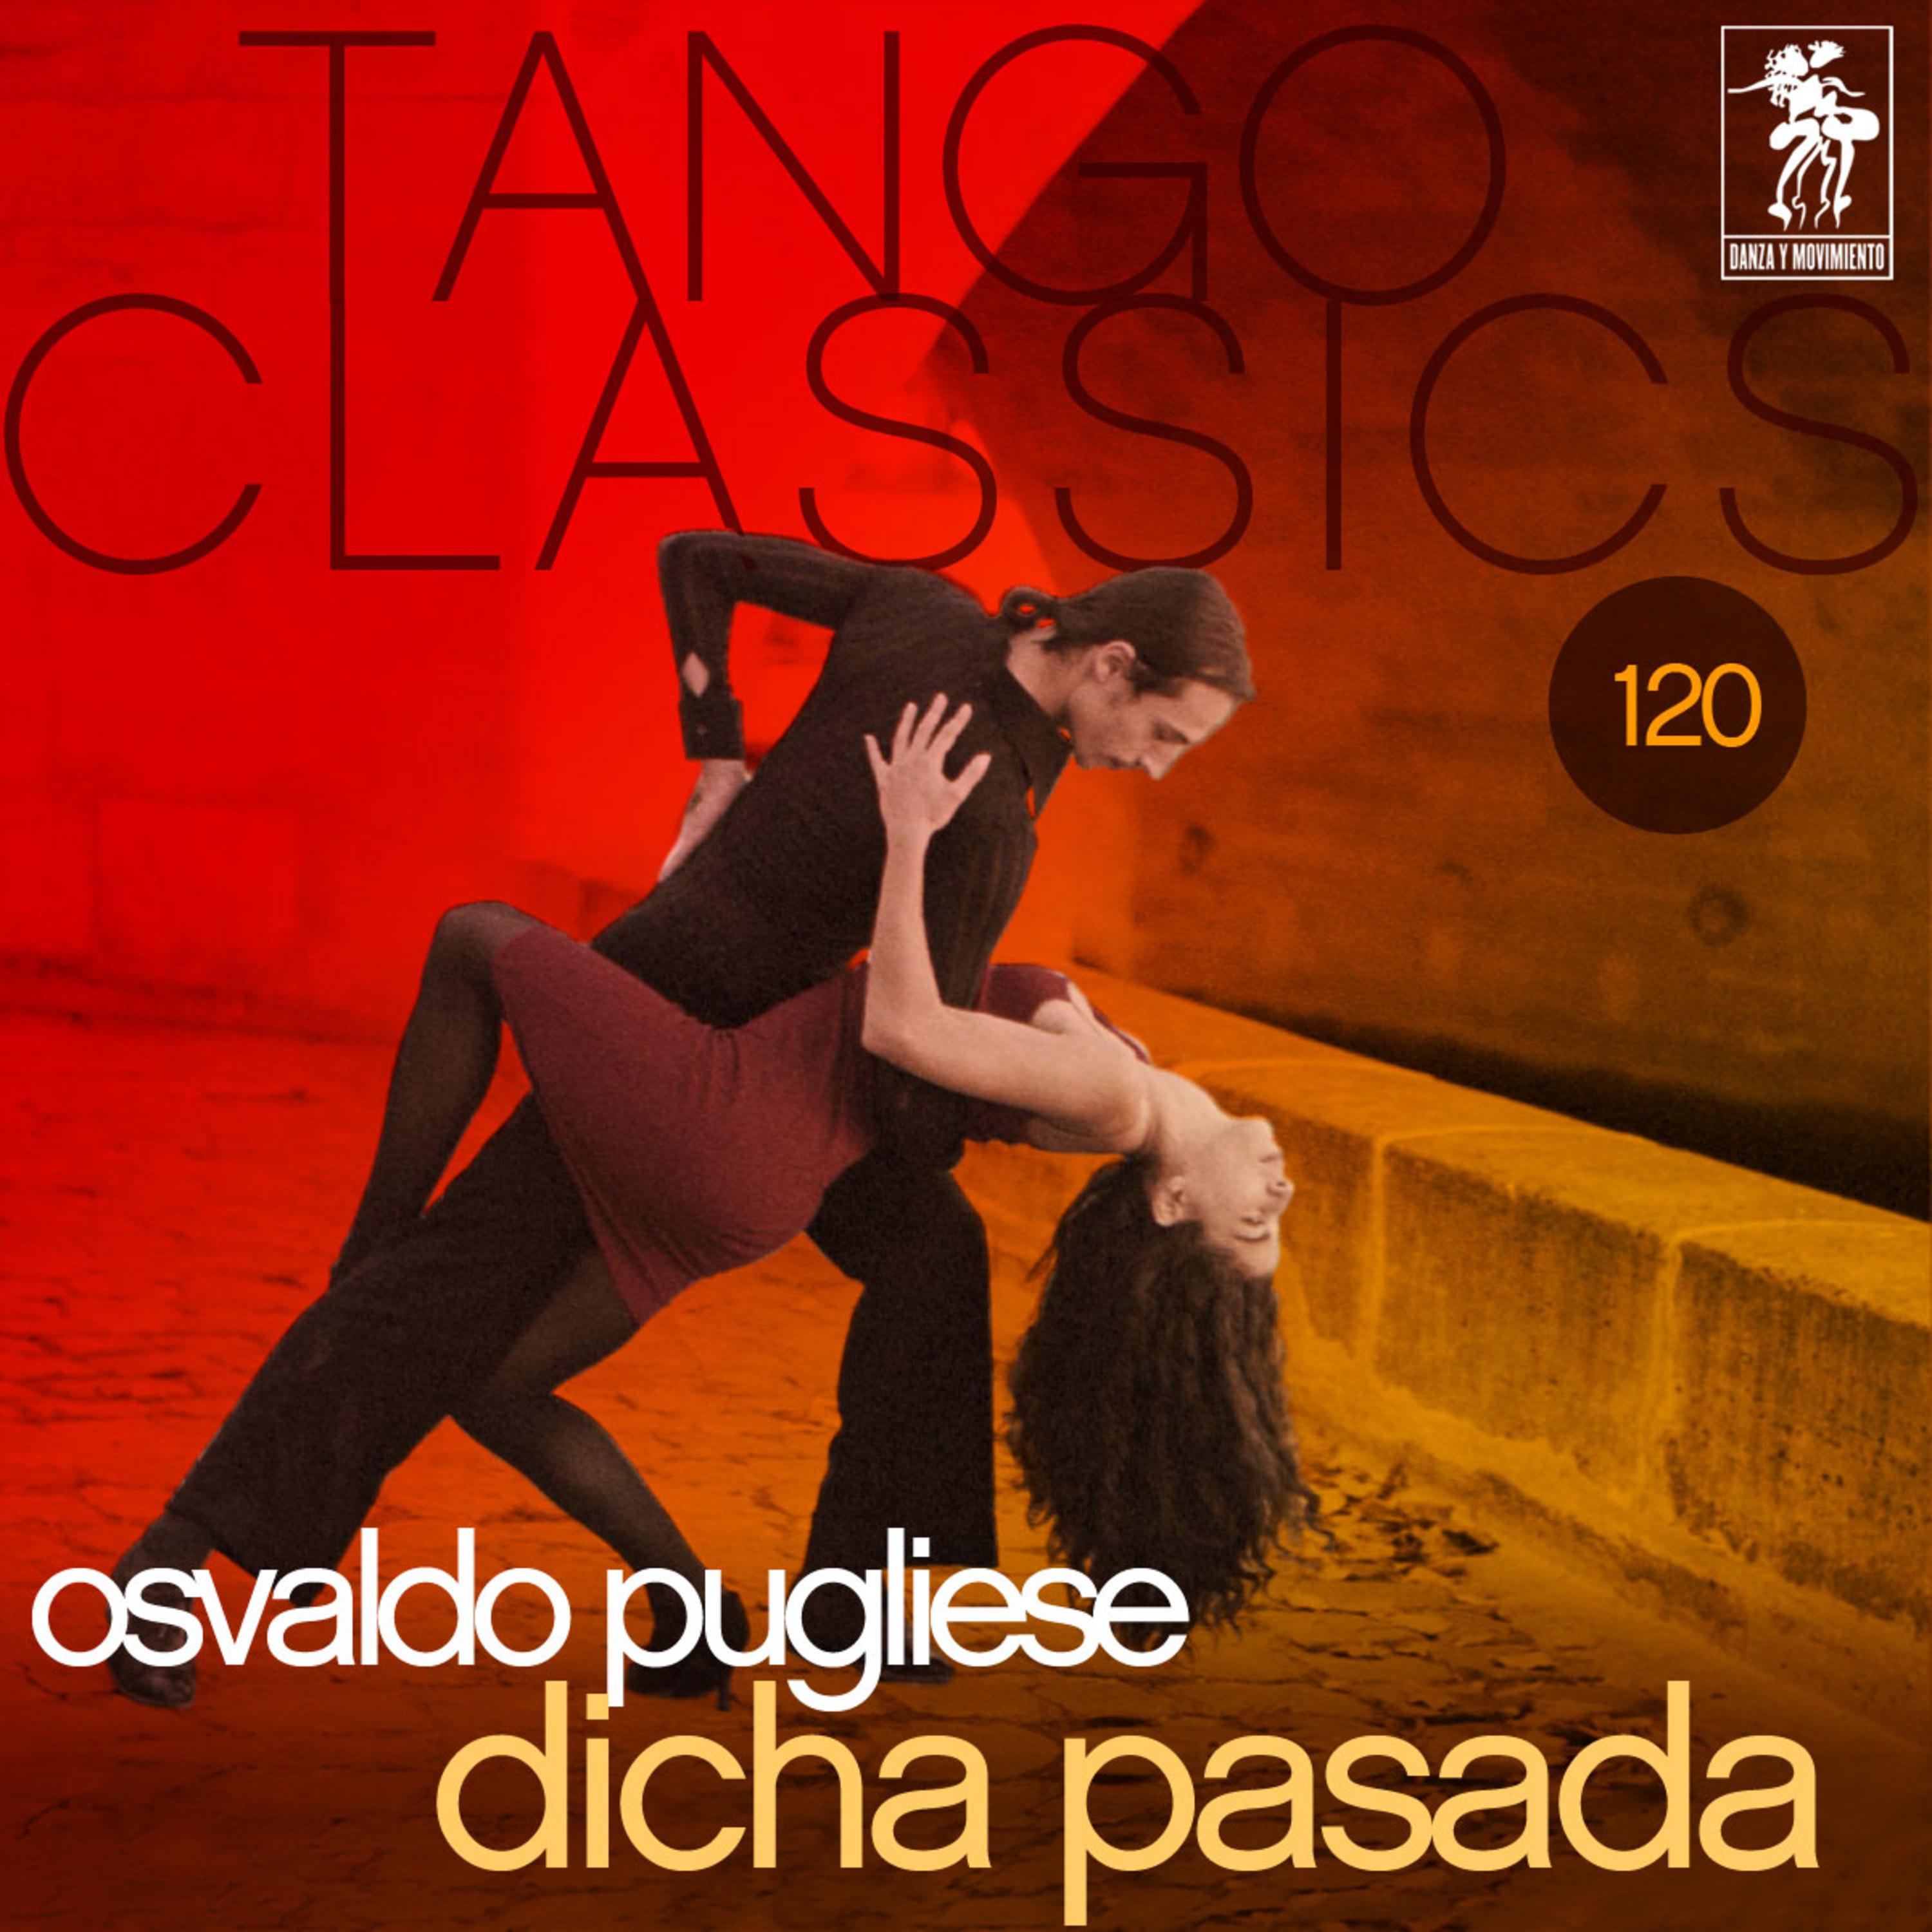 Tango Classics 120: Dicha pasada